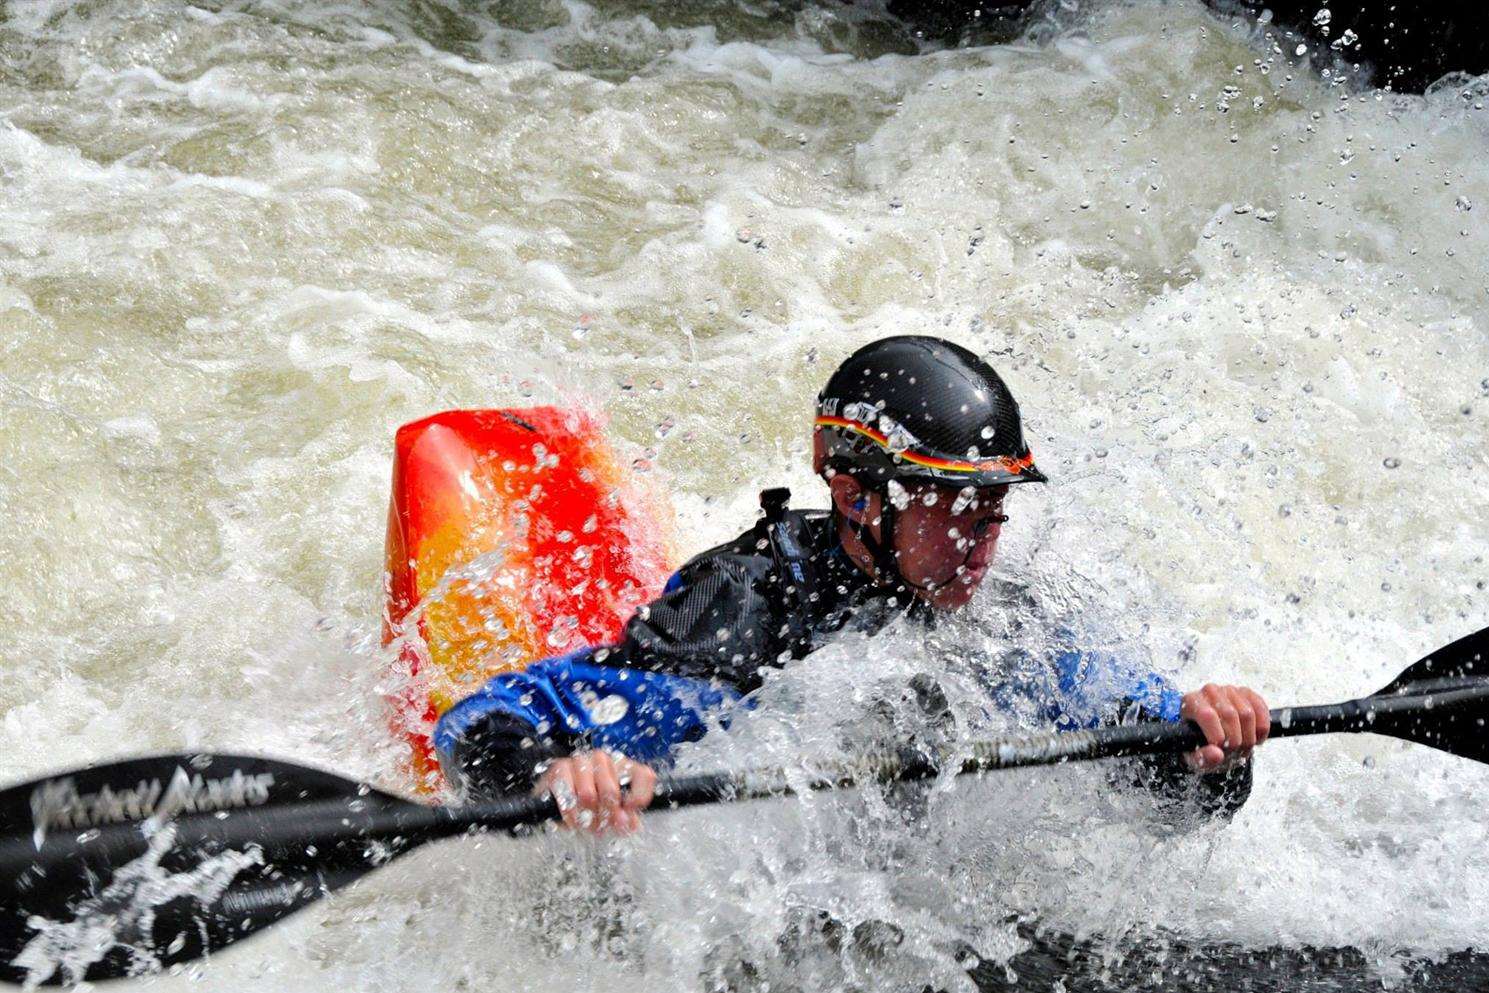 Kayaking champion Sam Wilson in action